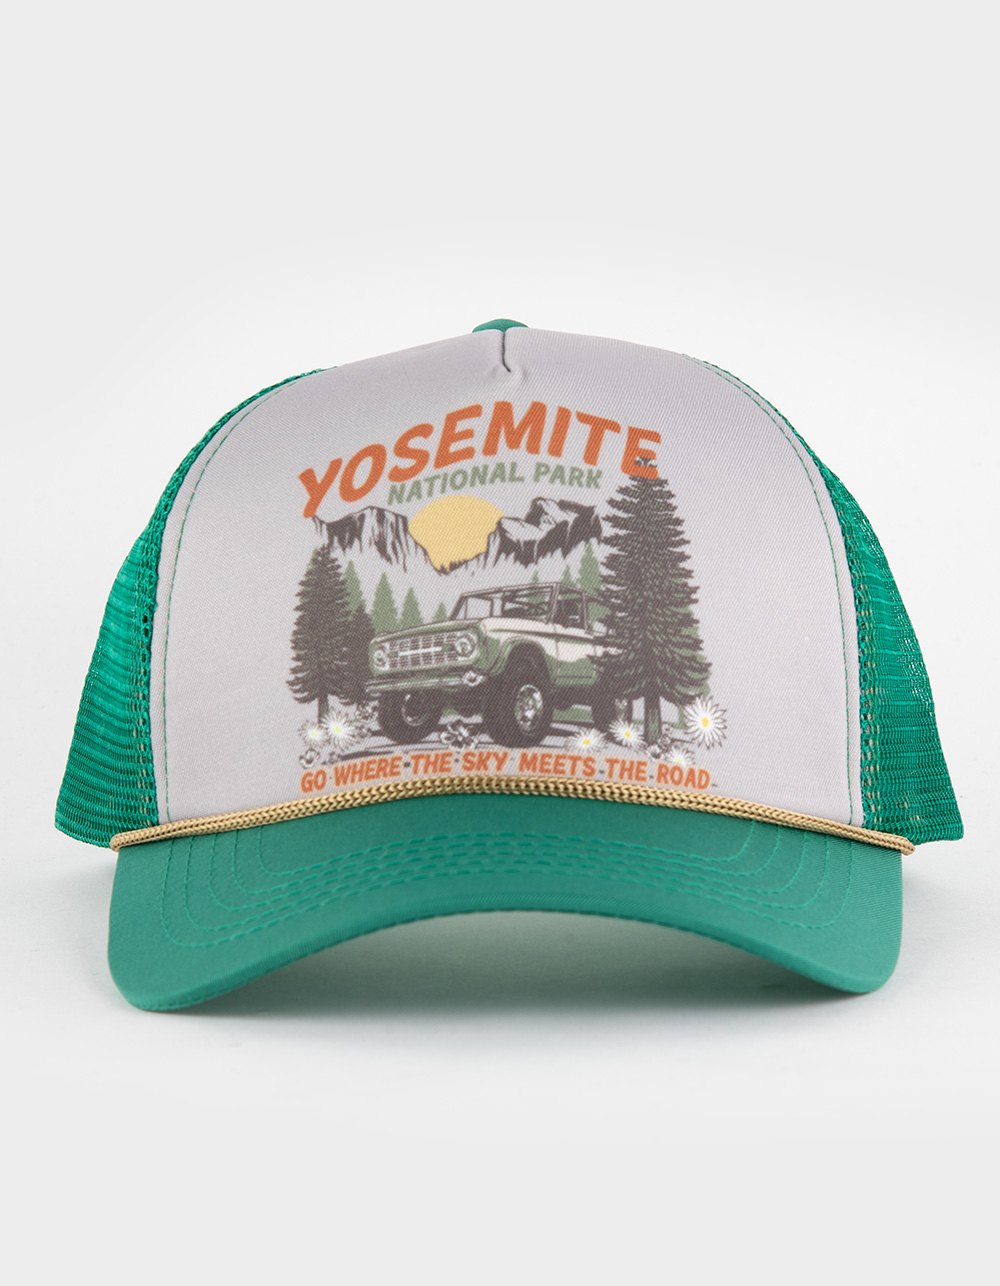 YOSEMITE Mens Trucker Hat - GREEN COMBO